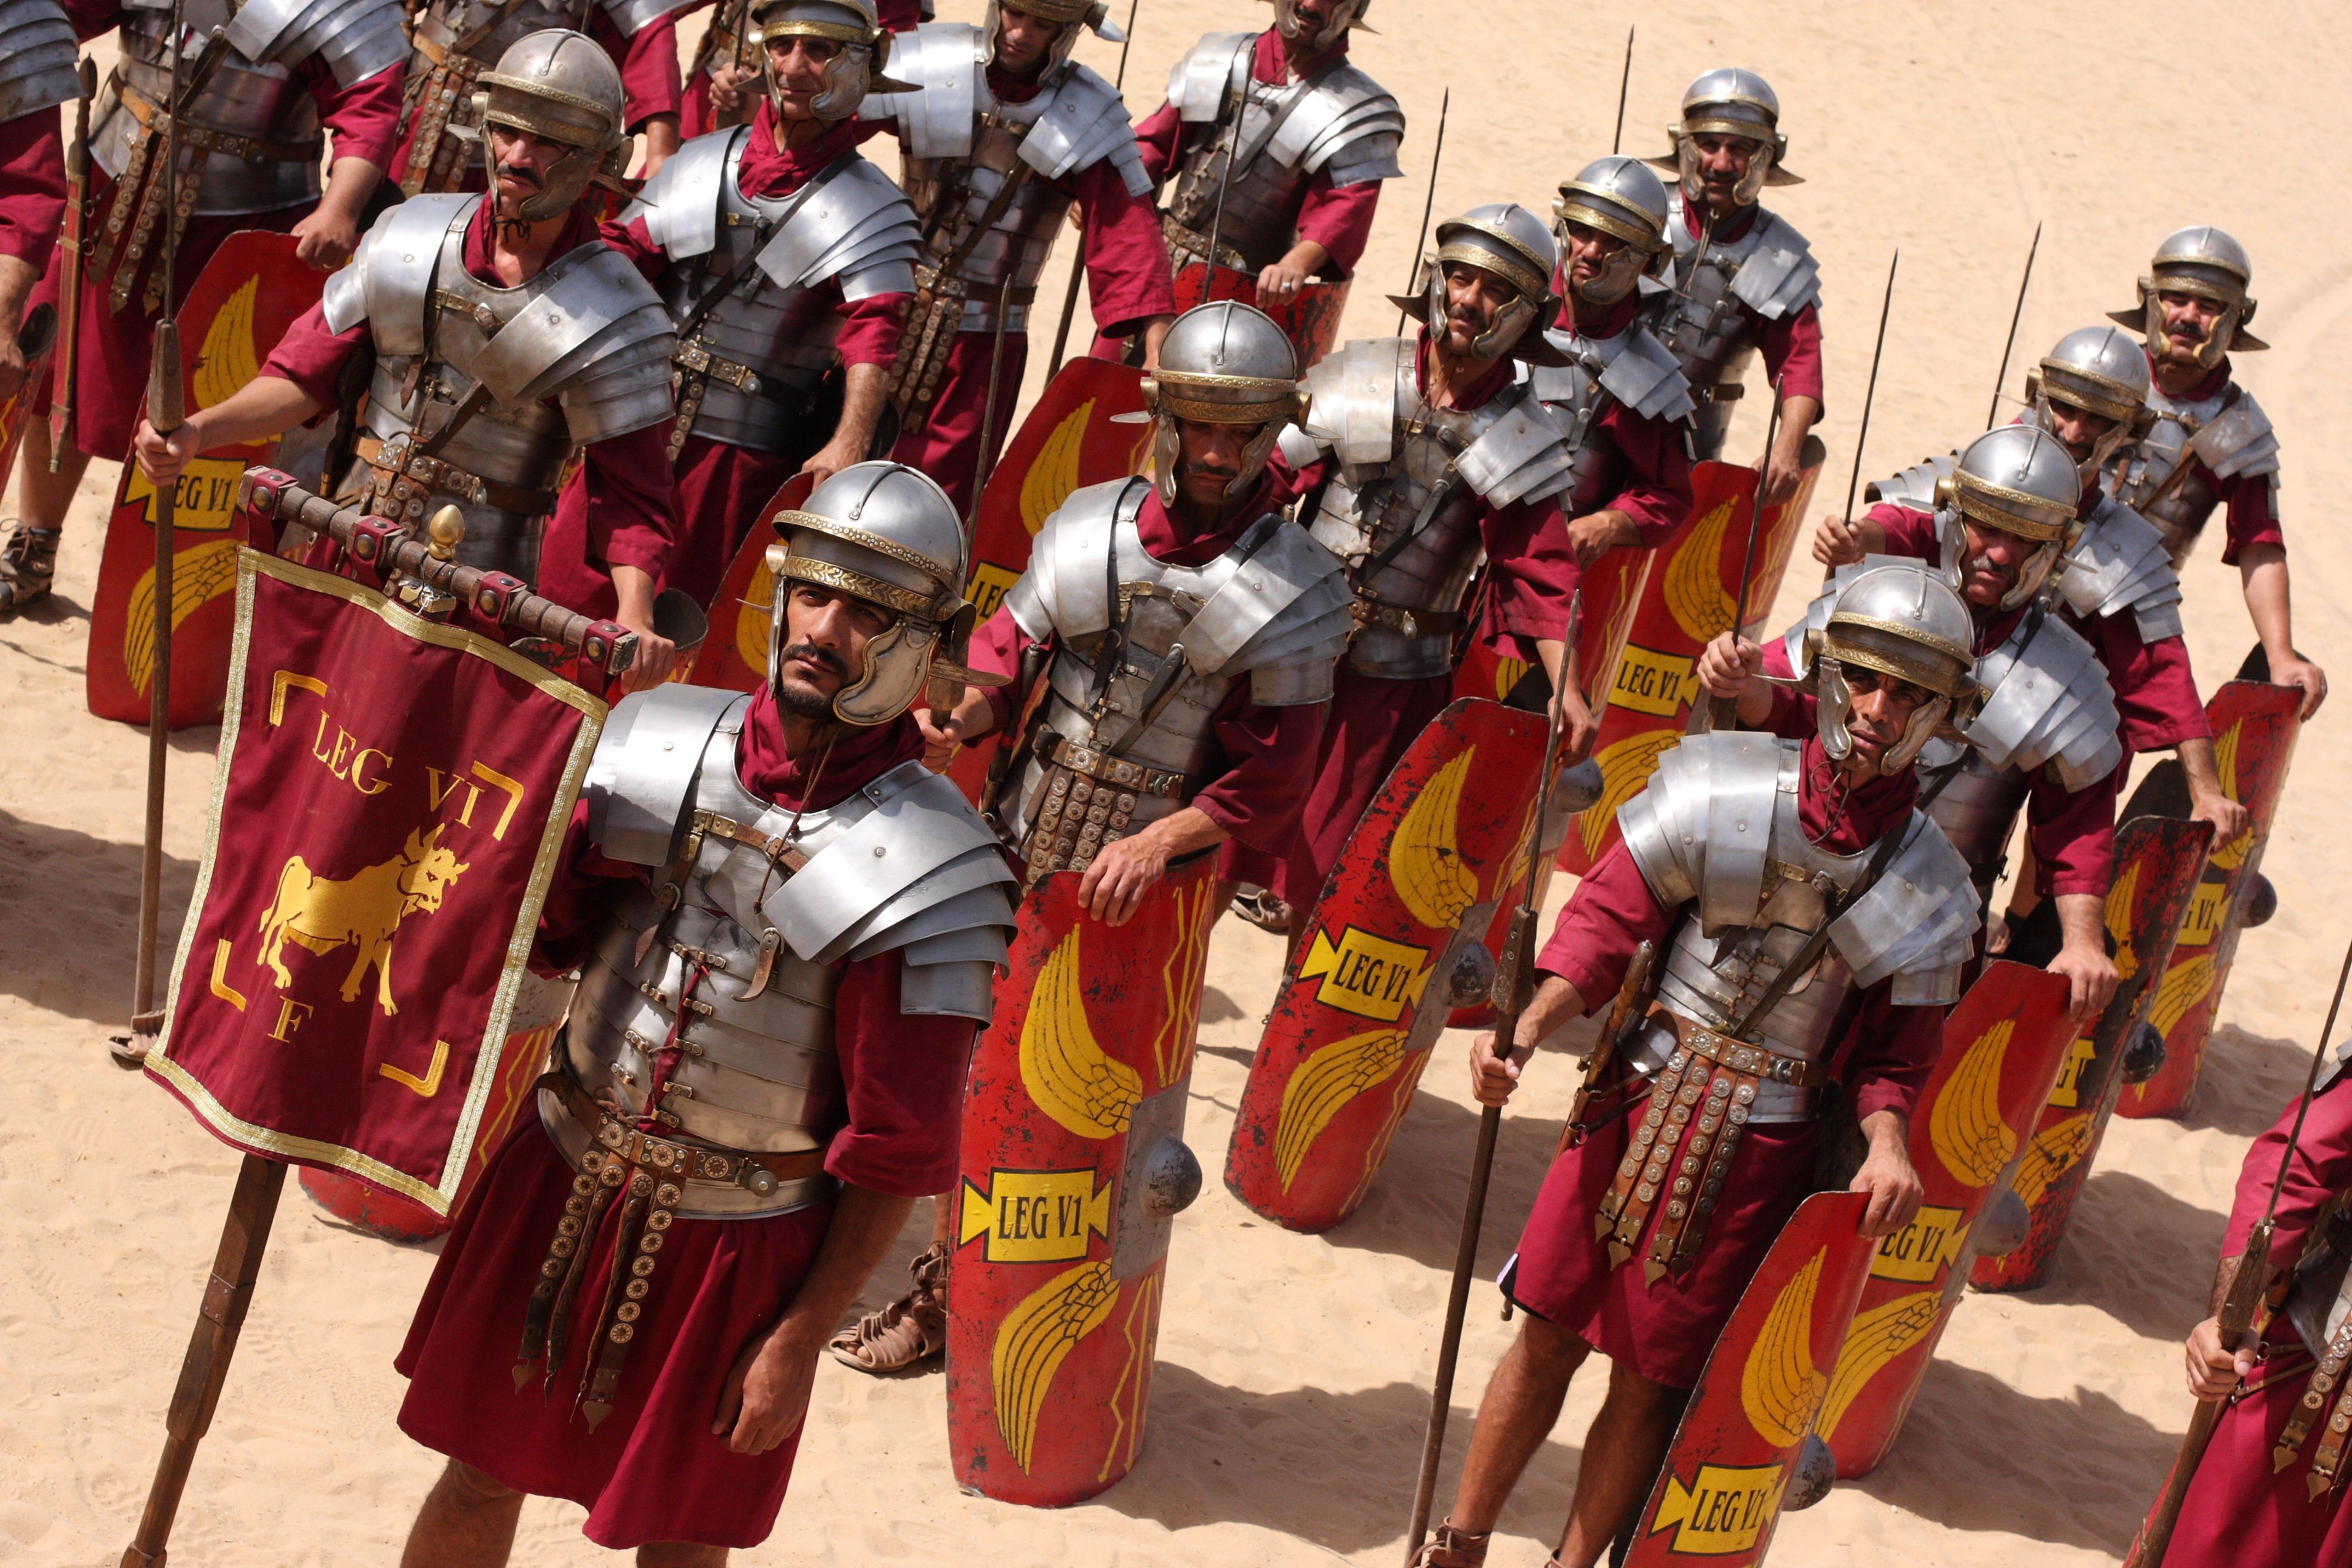 Приму в легион. Римский легионер. Армия римской империи Легион. Фаланга когорта Легион. Древний Рим армия Легионы.